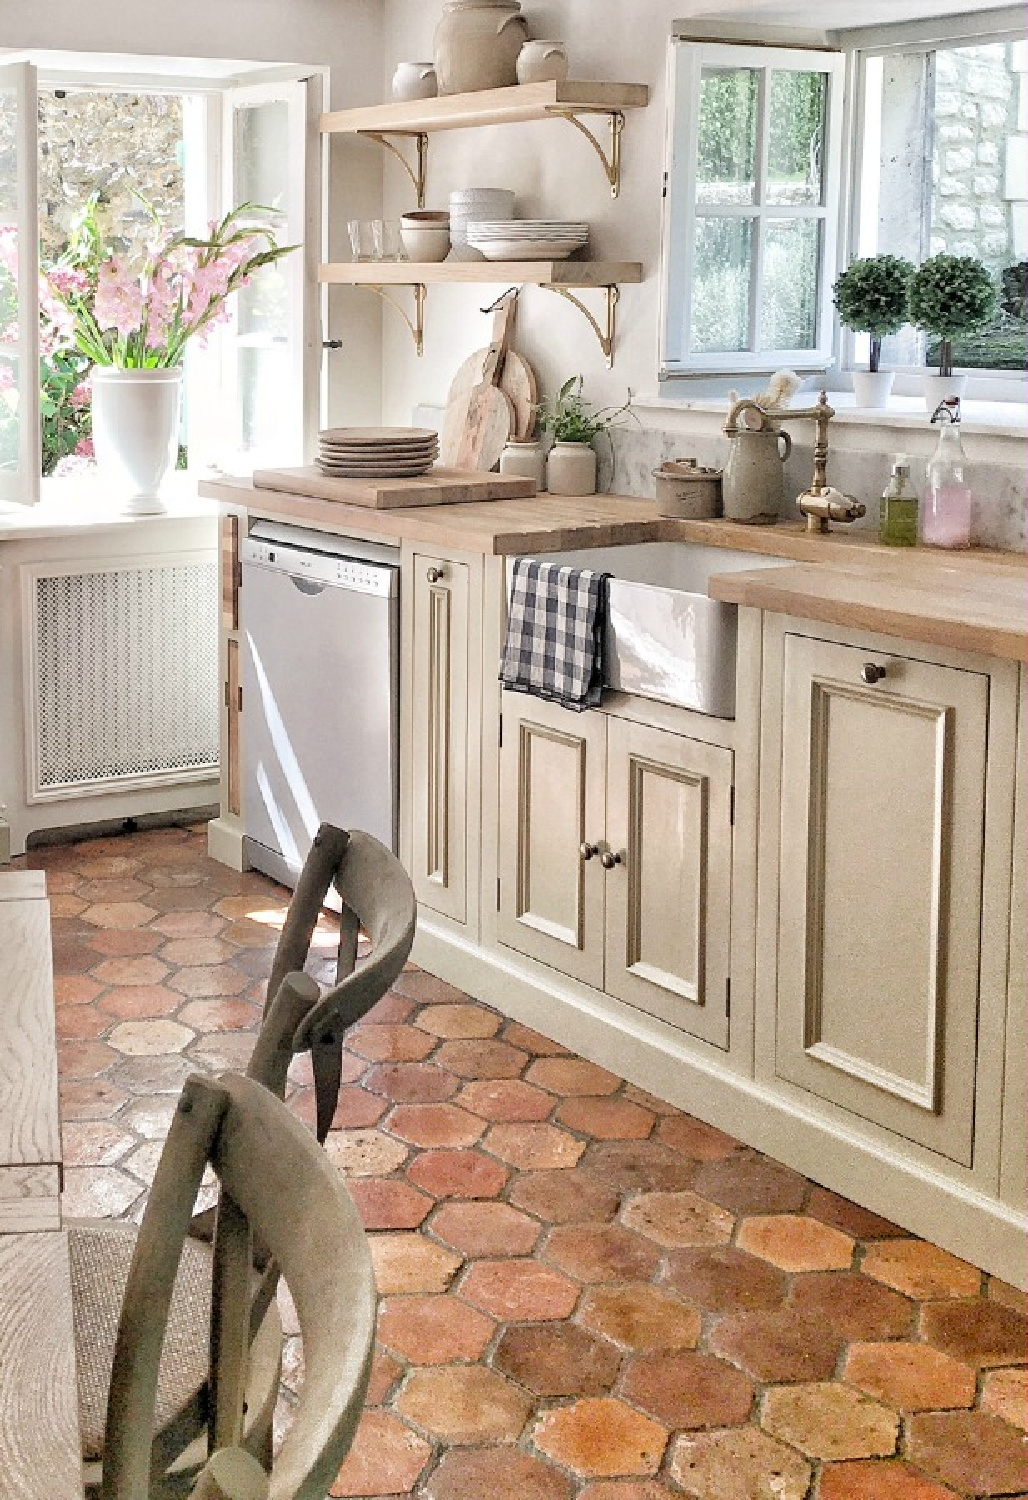 Authentic rustic elegant French farmhouse kitchen near Bordeaux with terracotta hex tile floor and putty cabinets - Vivi et Margot. #frenchkitchen #frenchfarmhouse